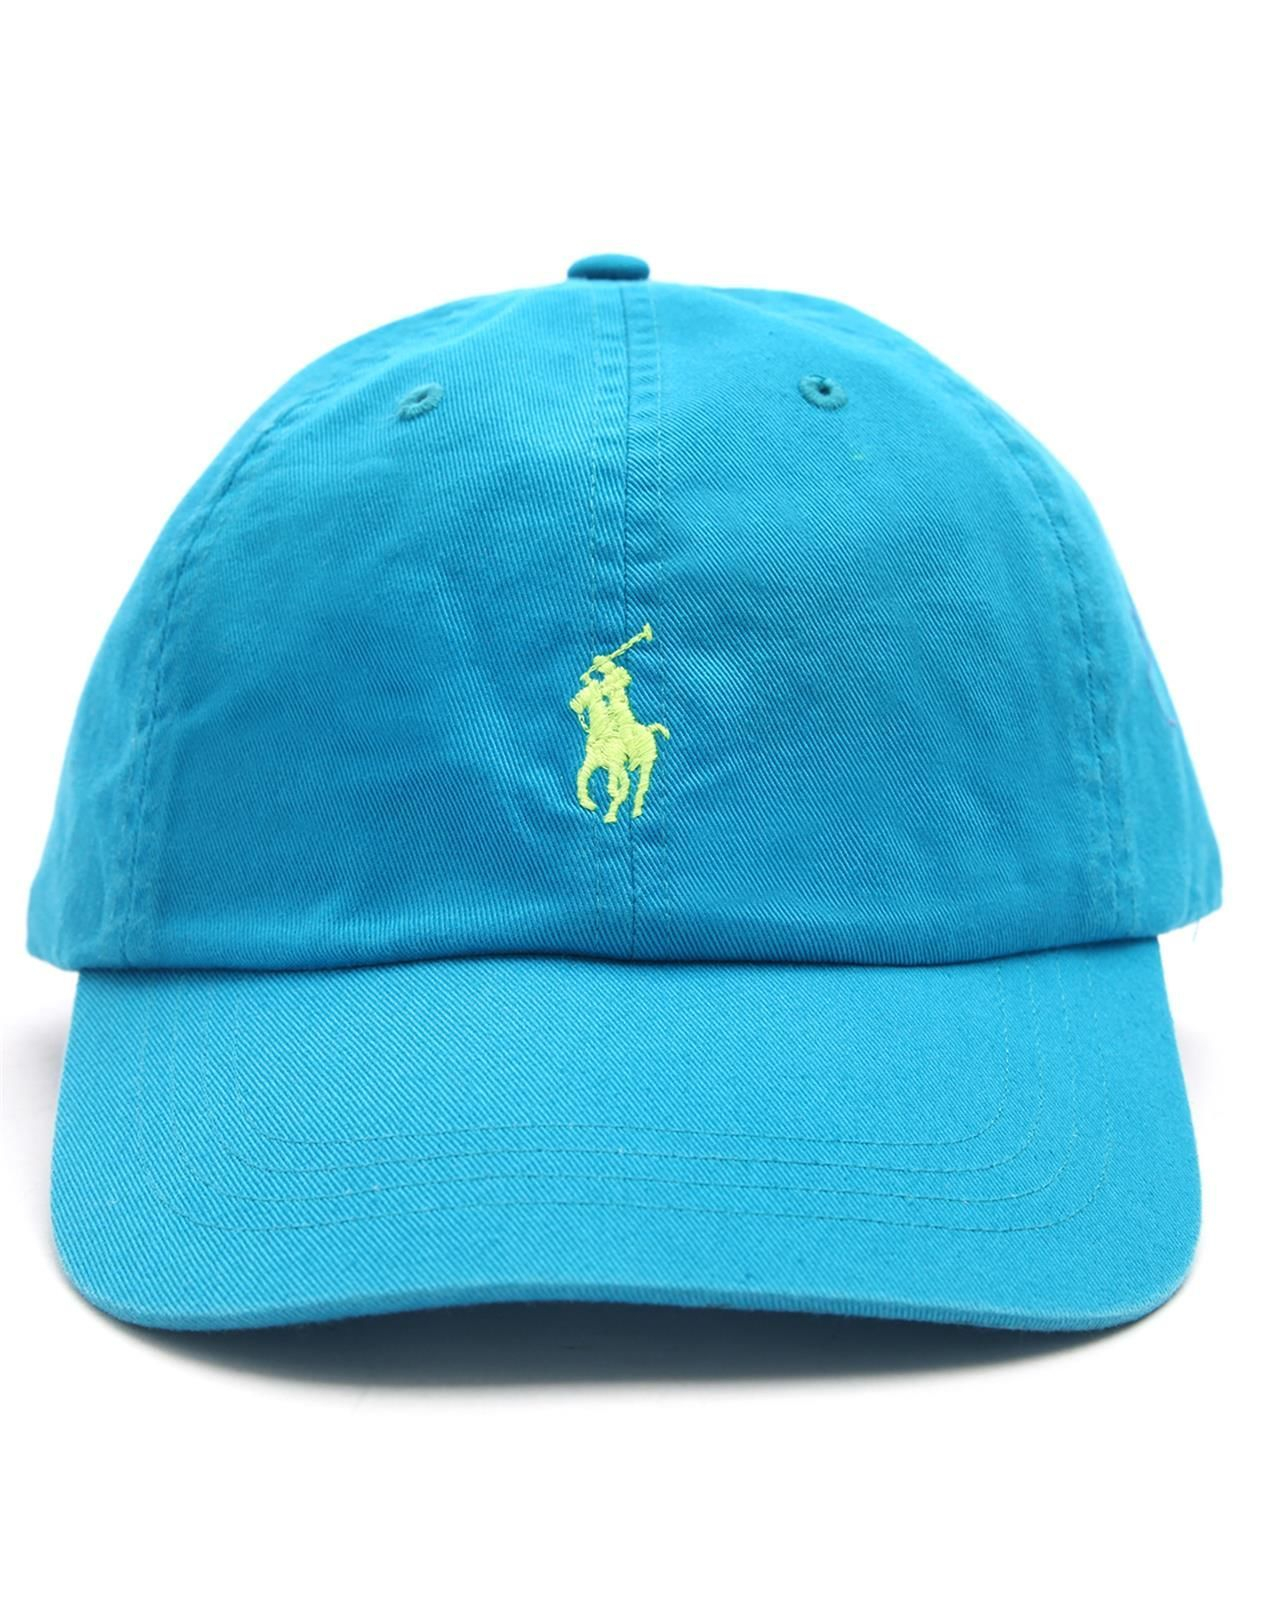 Polo Ralph Lauren Maui Blue Classic Sport Cap in Blue for Men